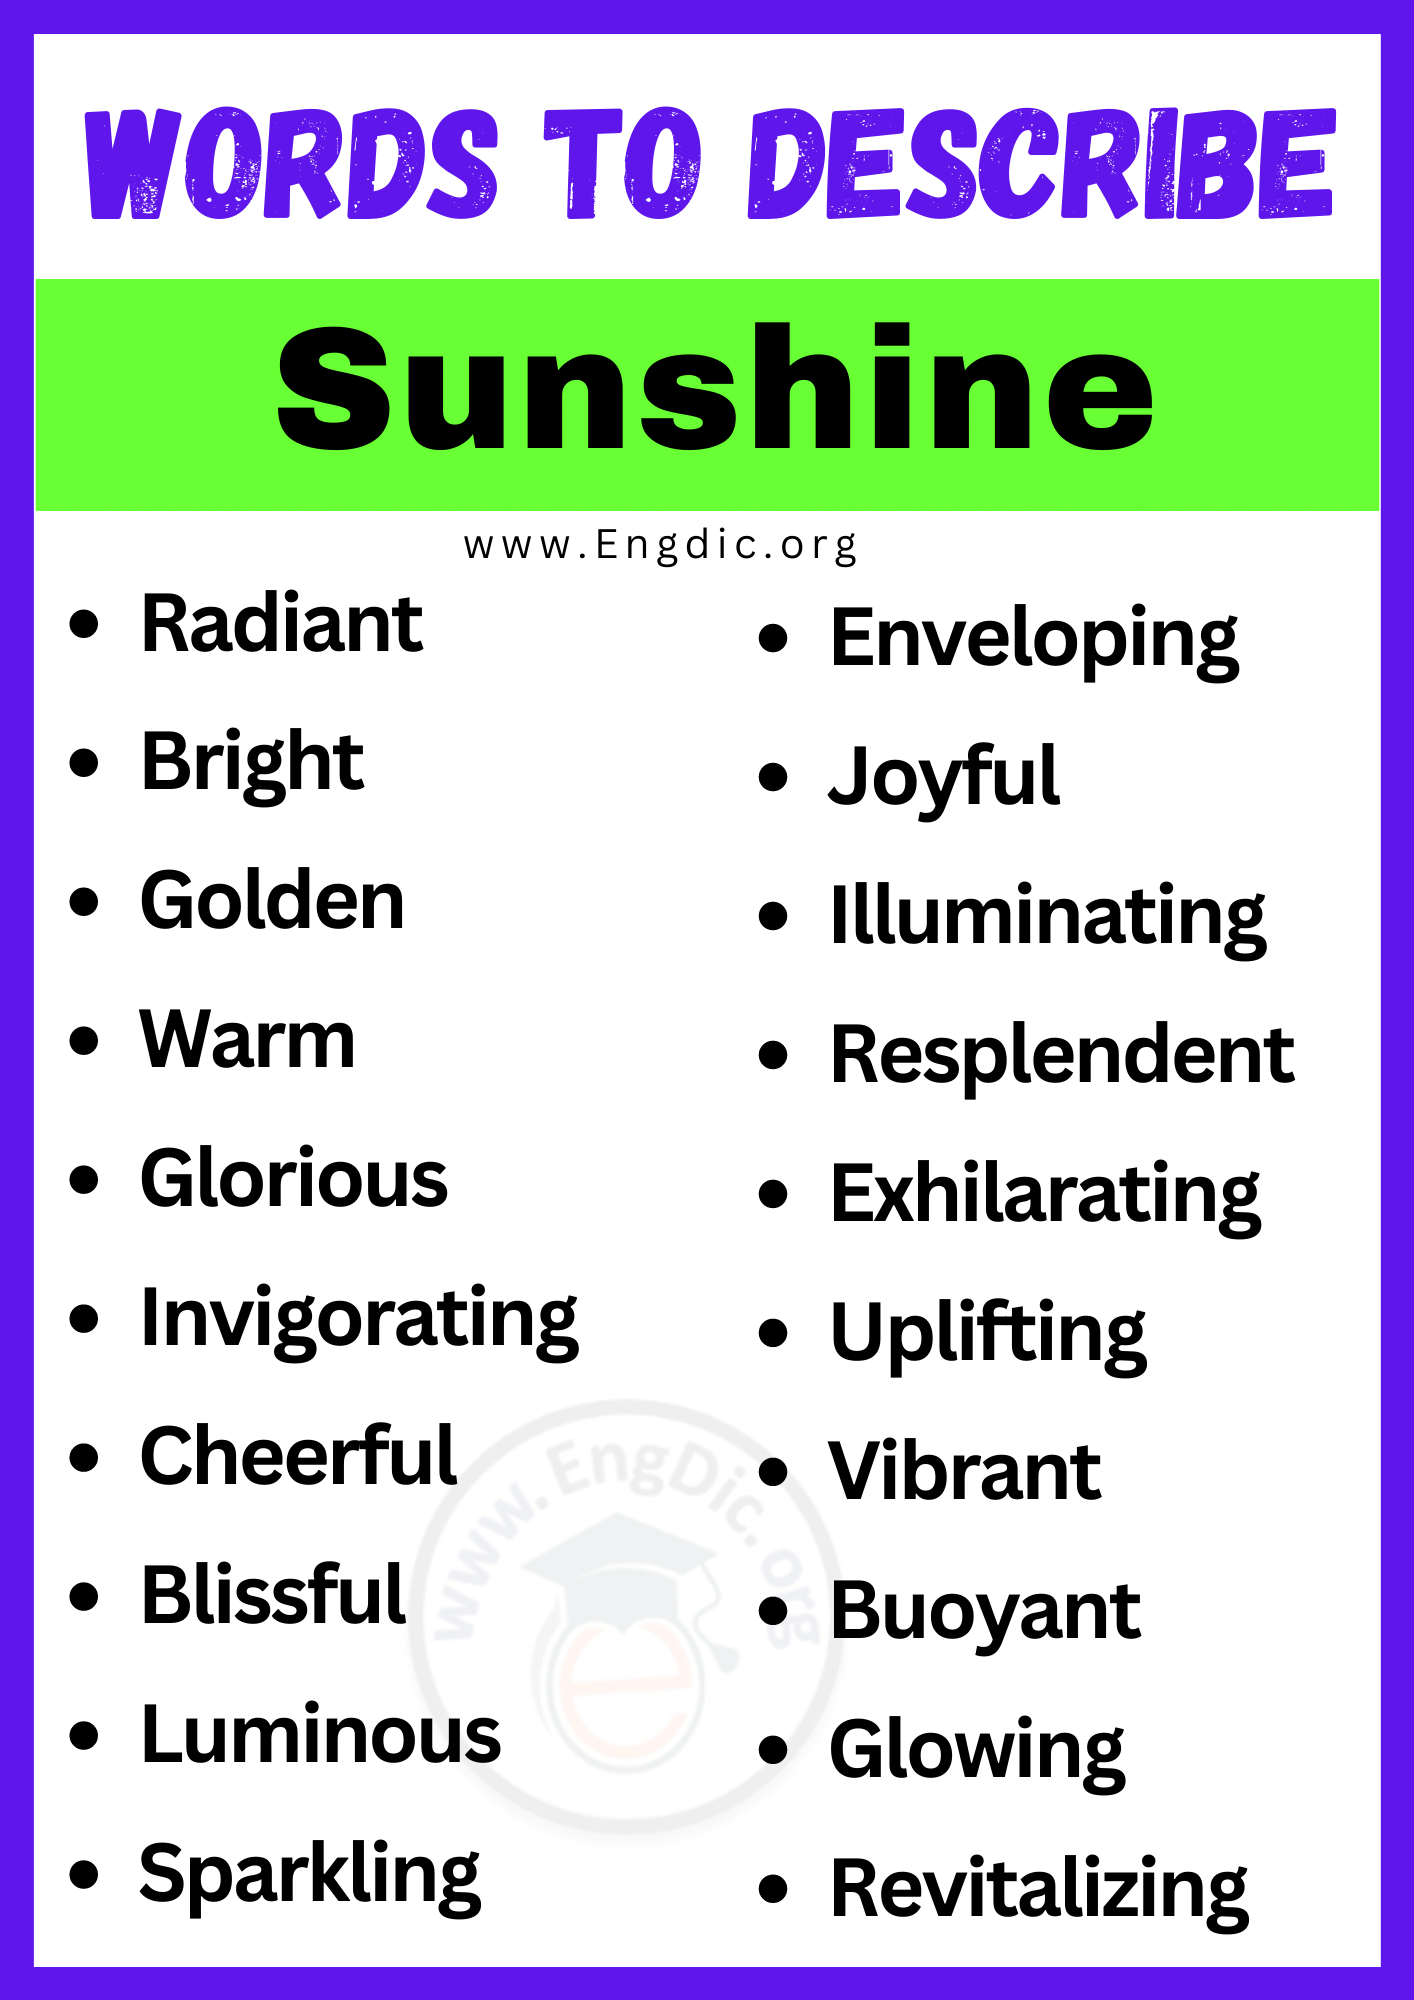 Words to Describe Sunshine